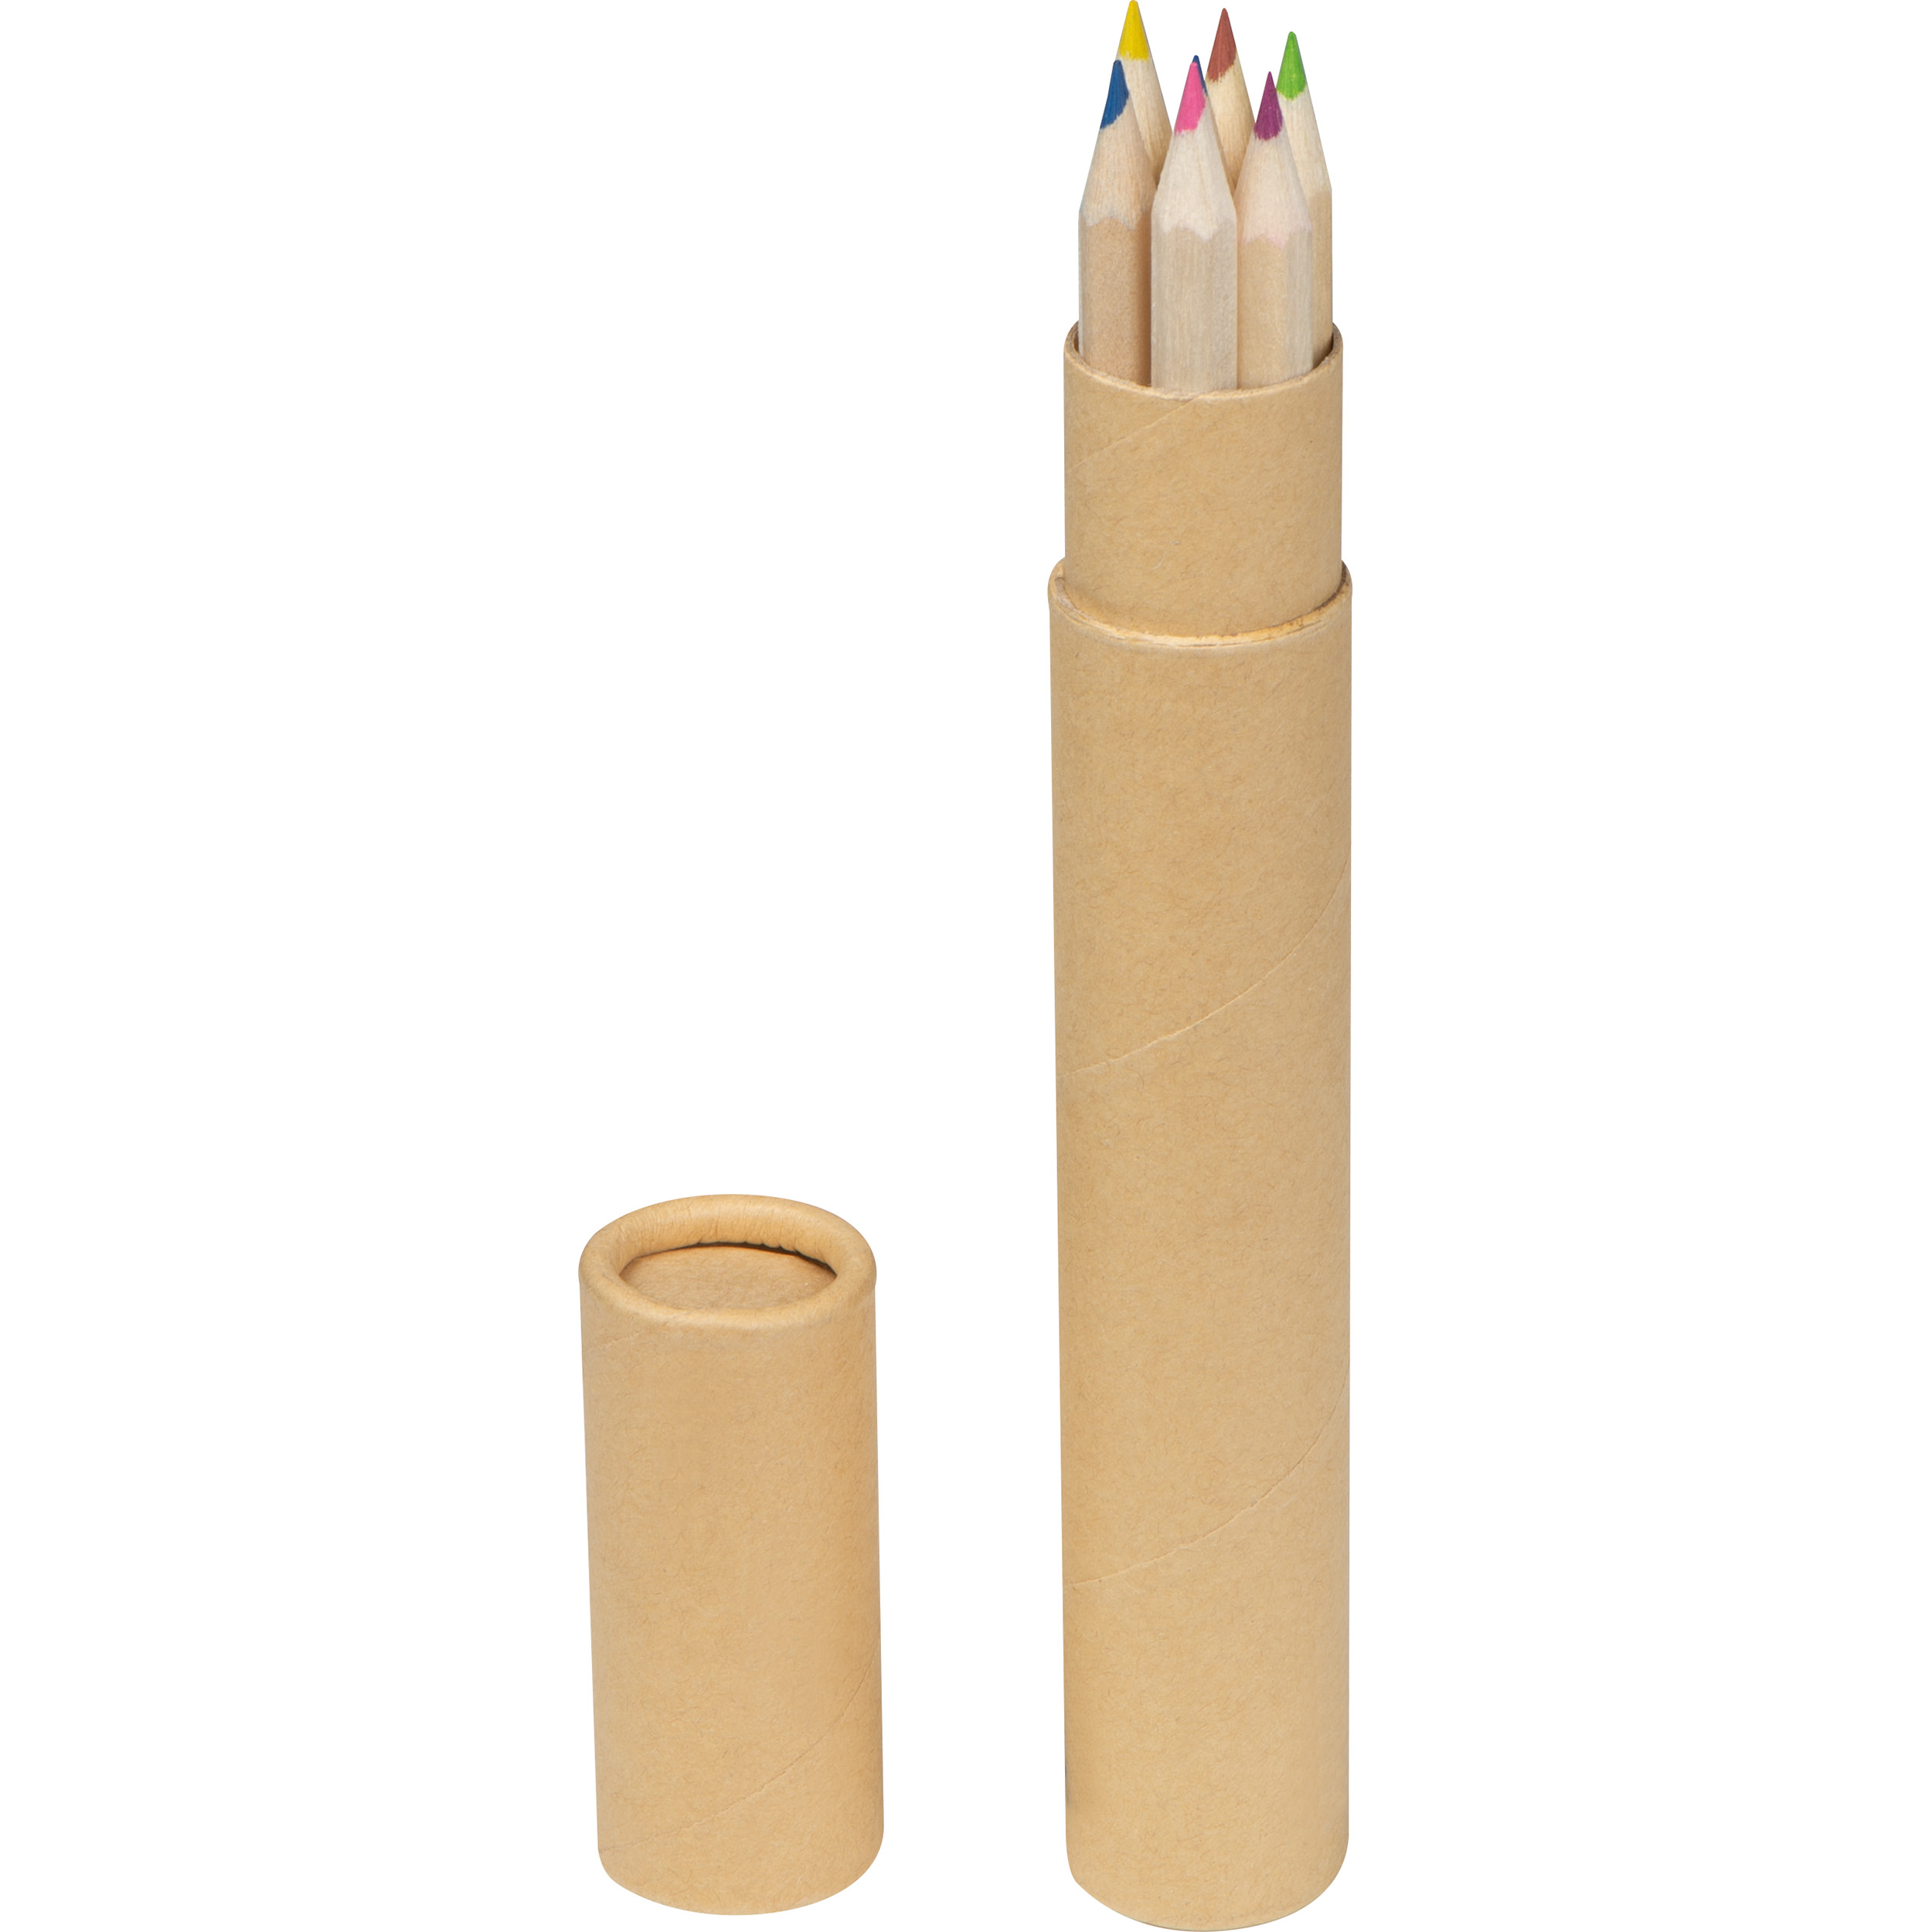 7 longs crayons de couleurs